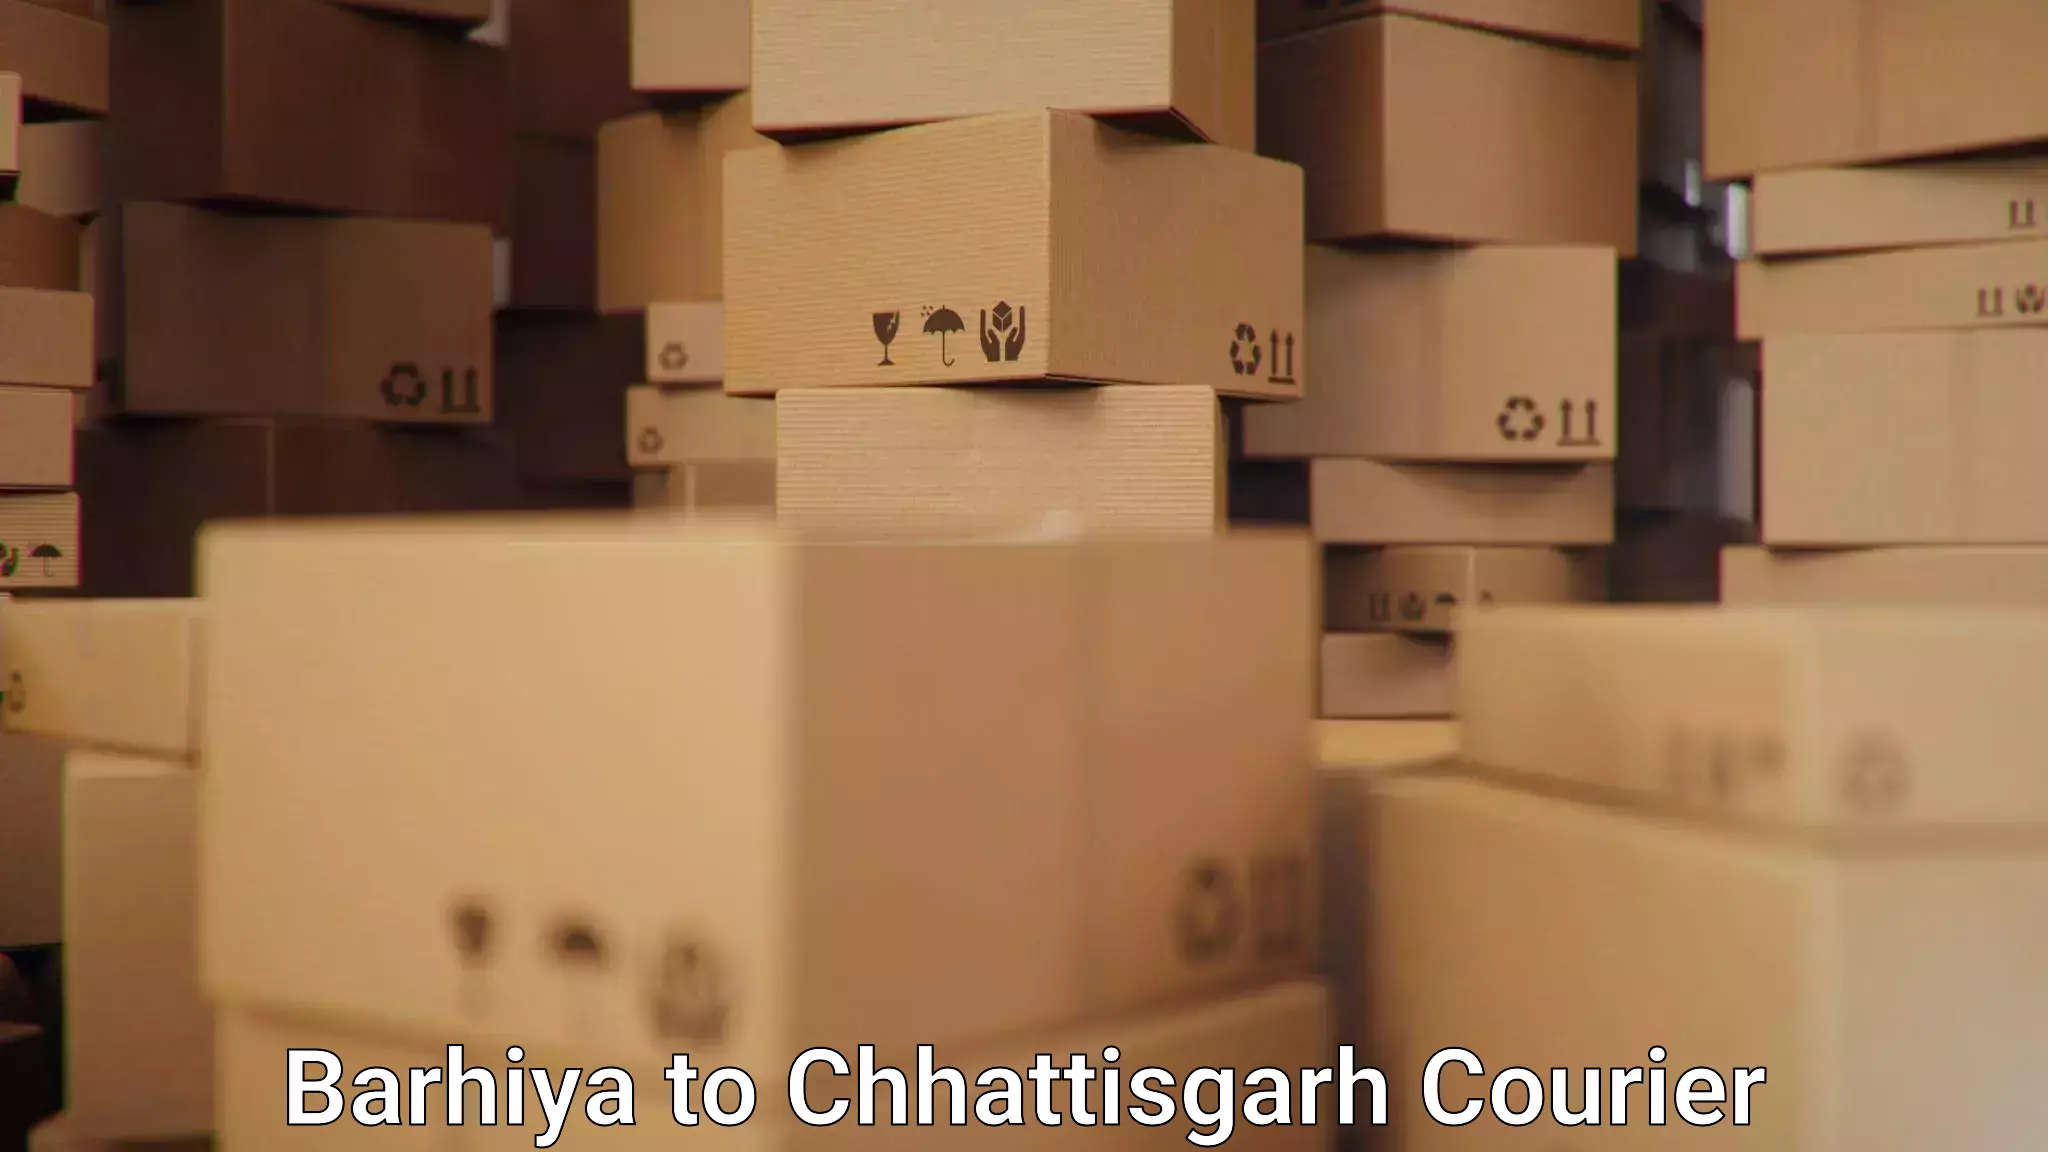 Professional courier handling Barhiya to Raigarh